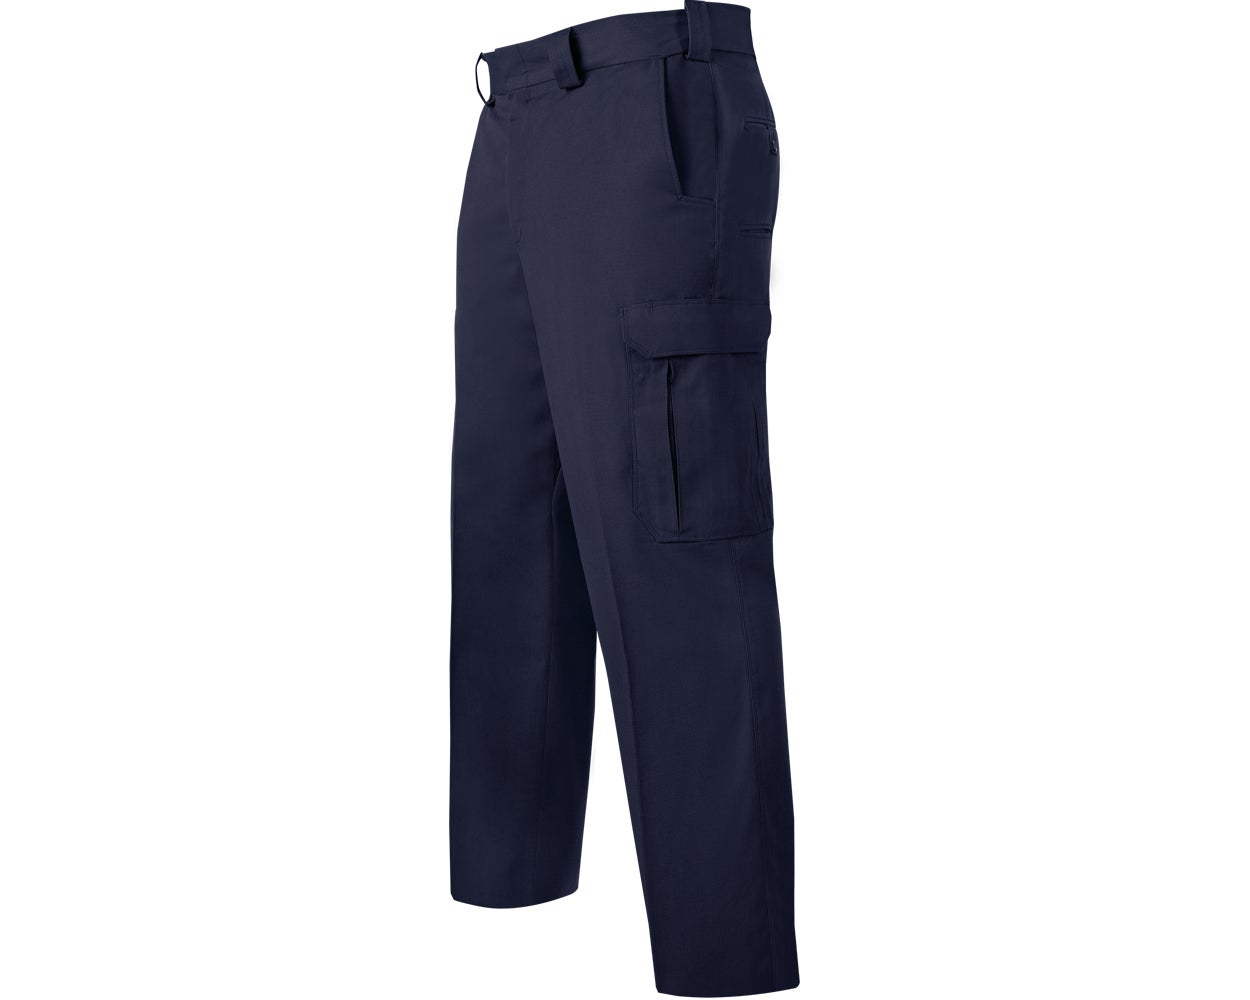 Flying Cross FX STAT Women's Class B Uniform Pants FX77300W - Newest Products